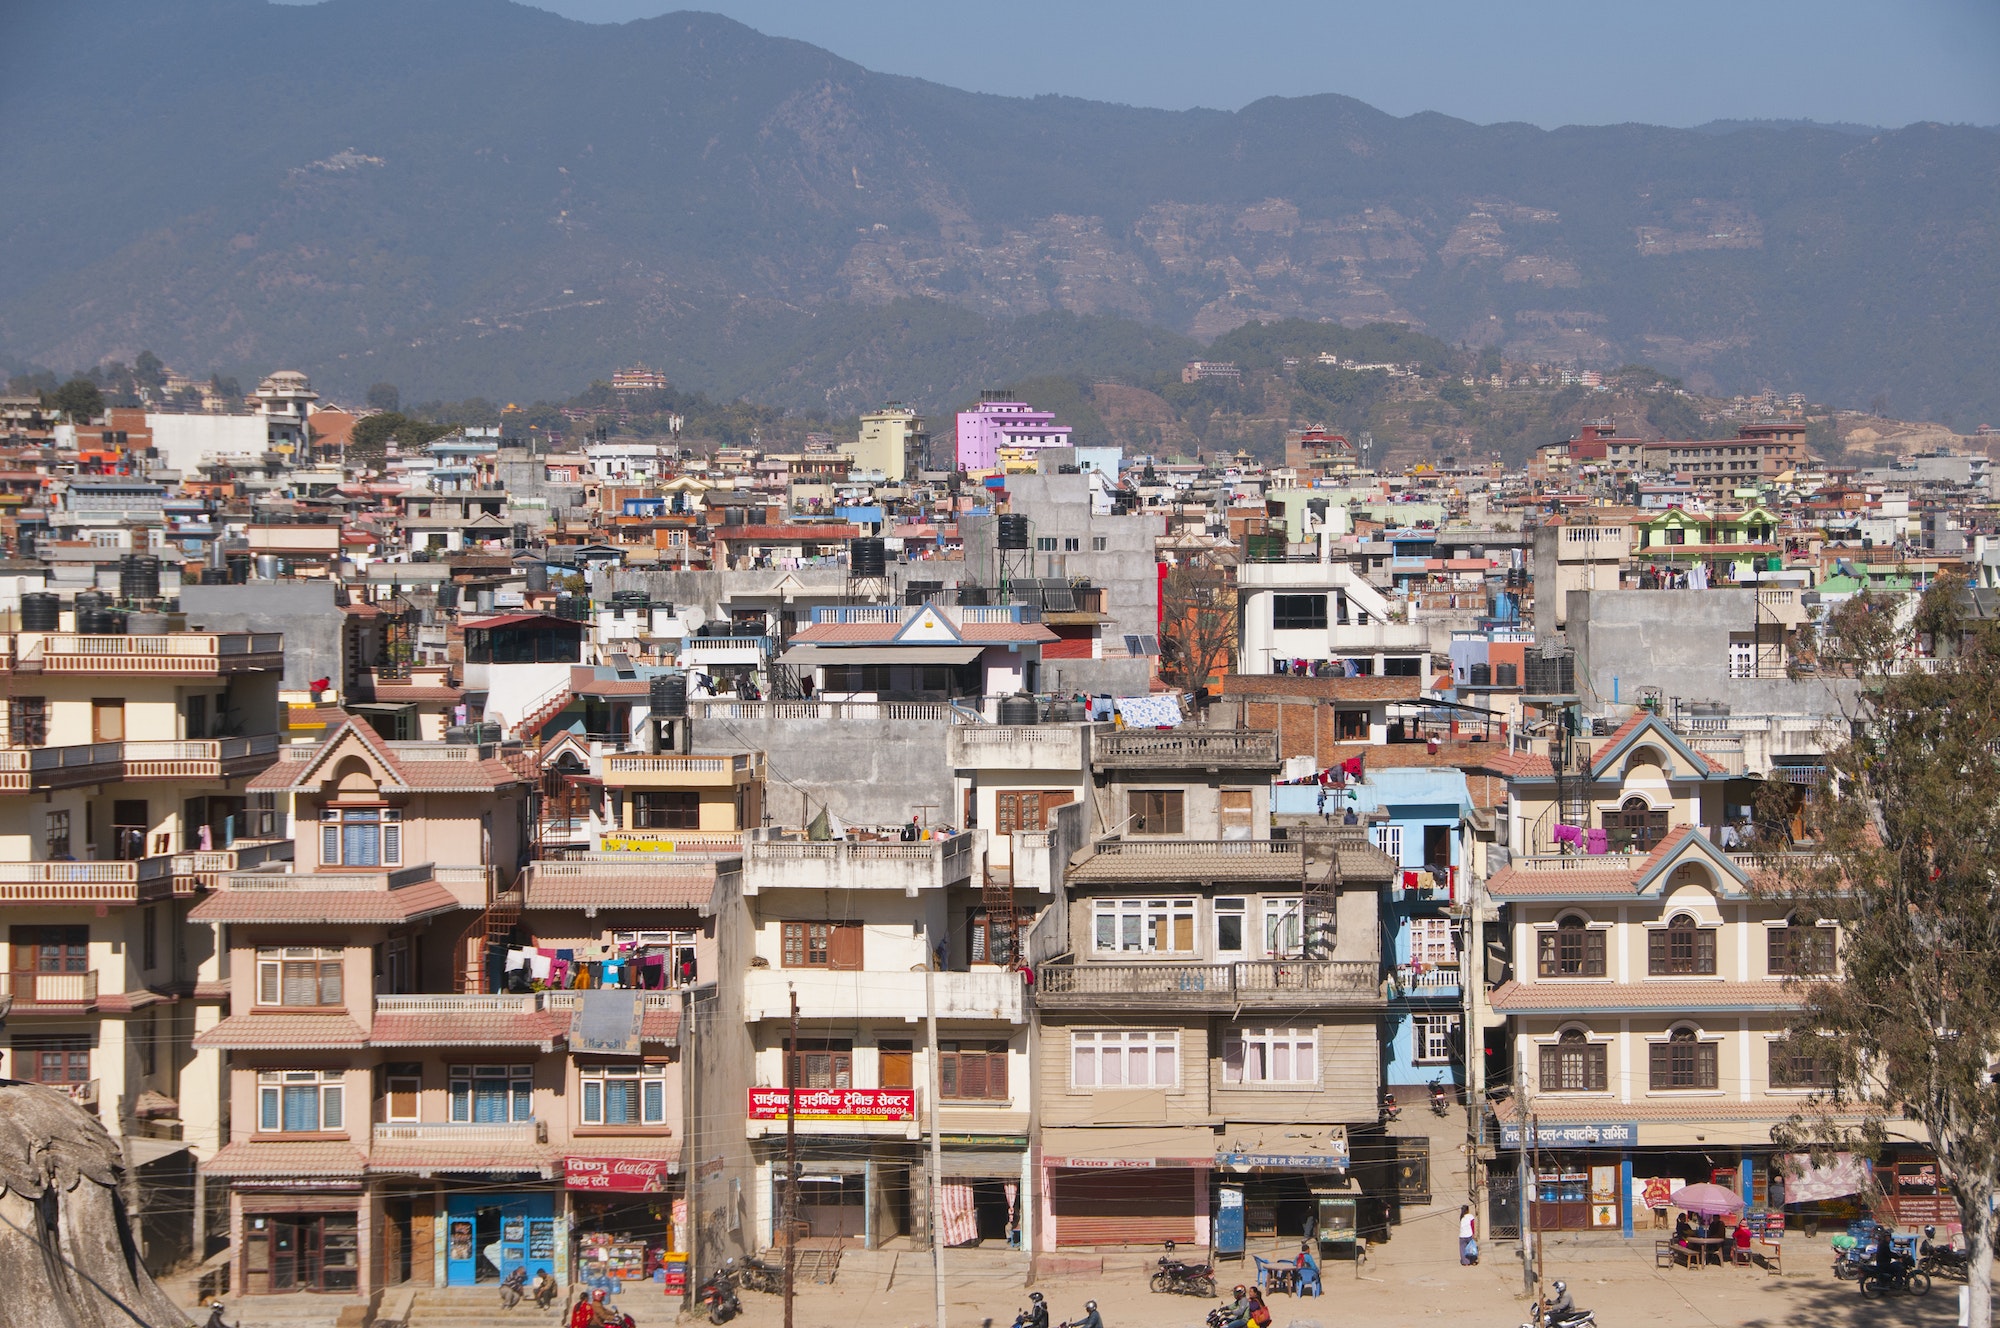 Arial view of Kathmandu city, Nepal